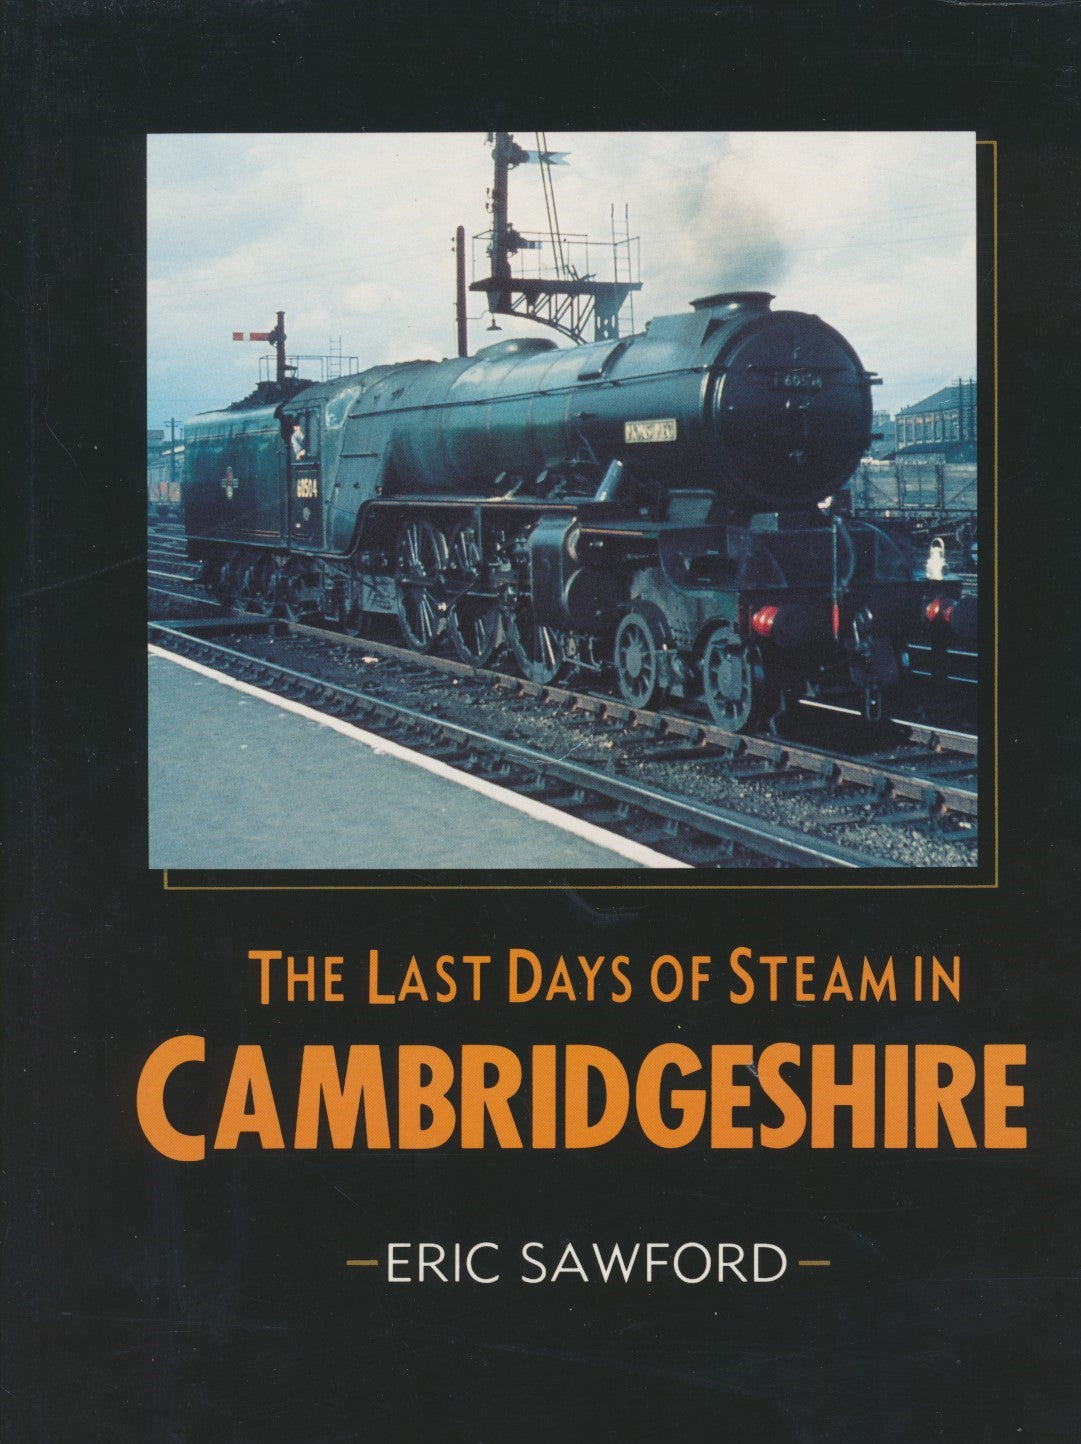 The Last Days of Steam in Cambridgeshire